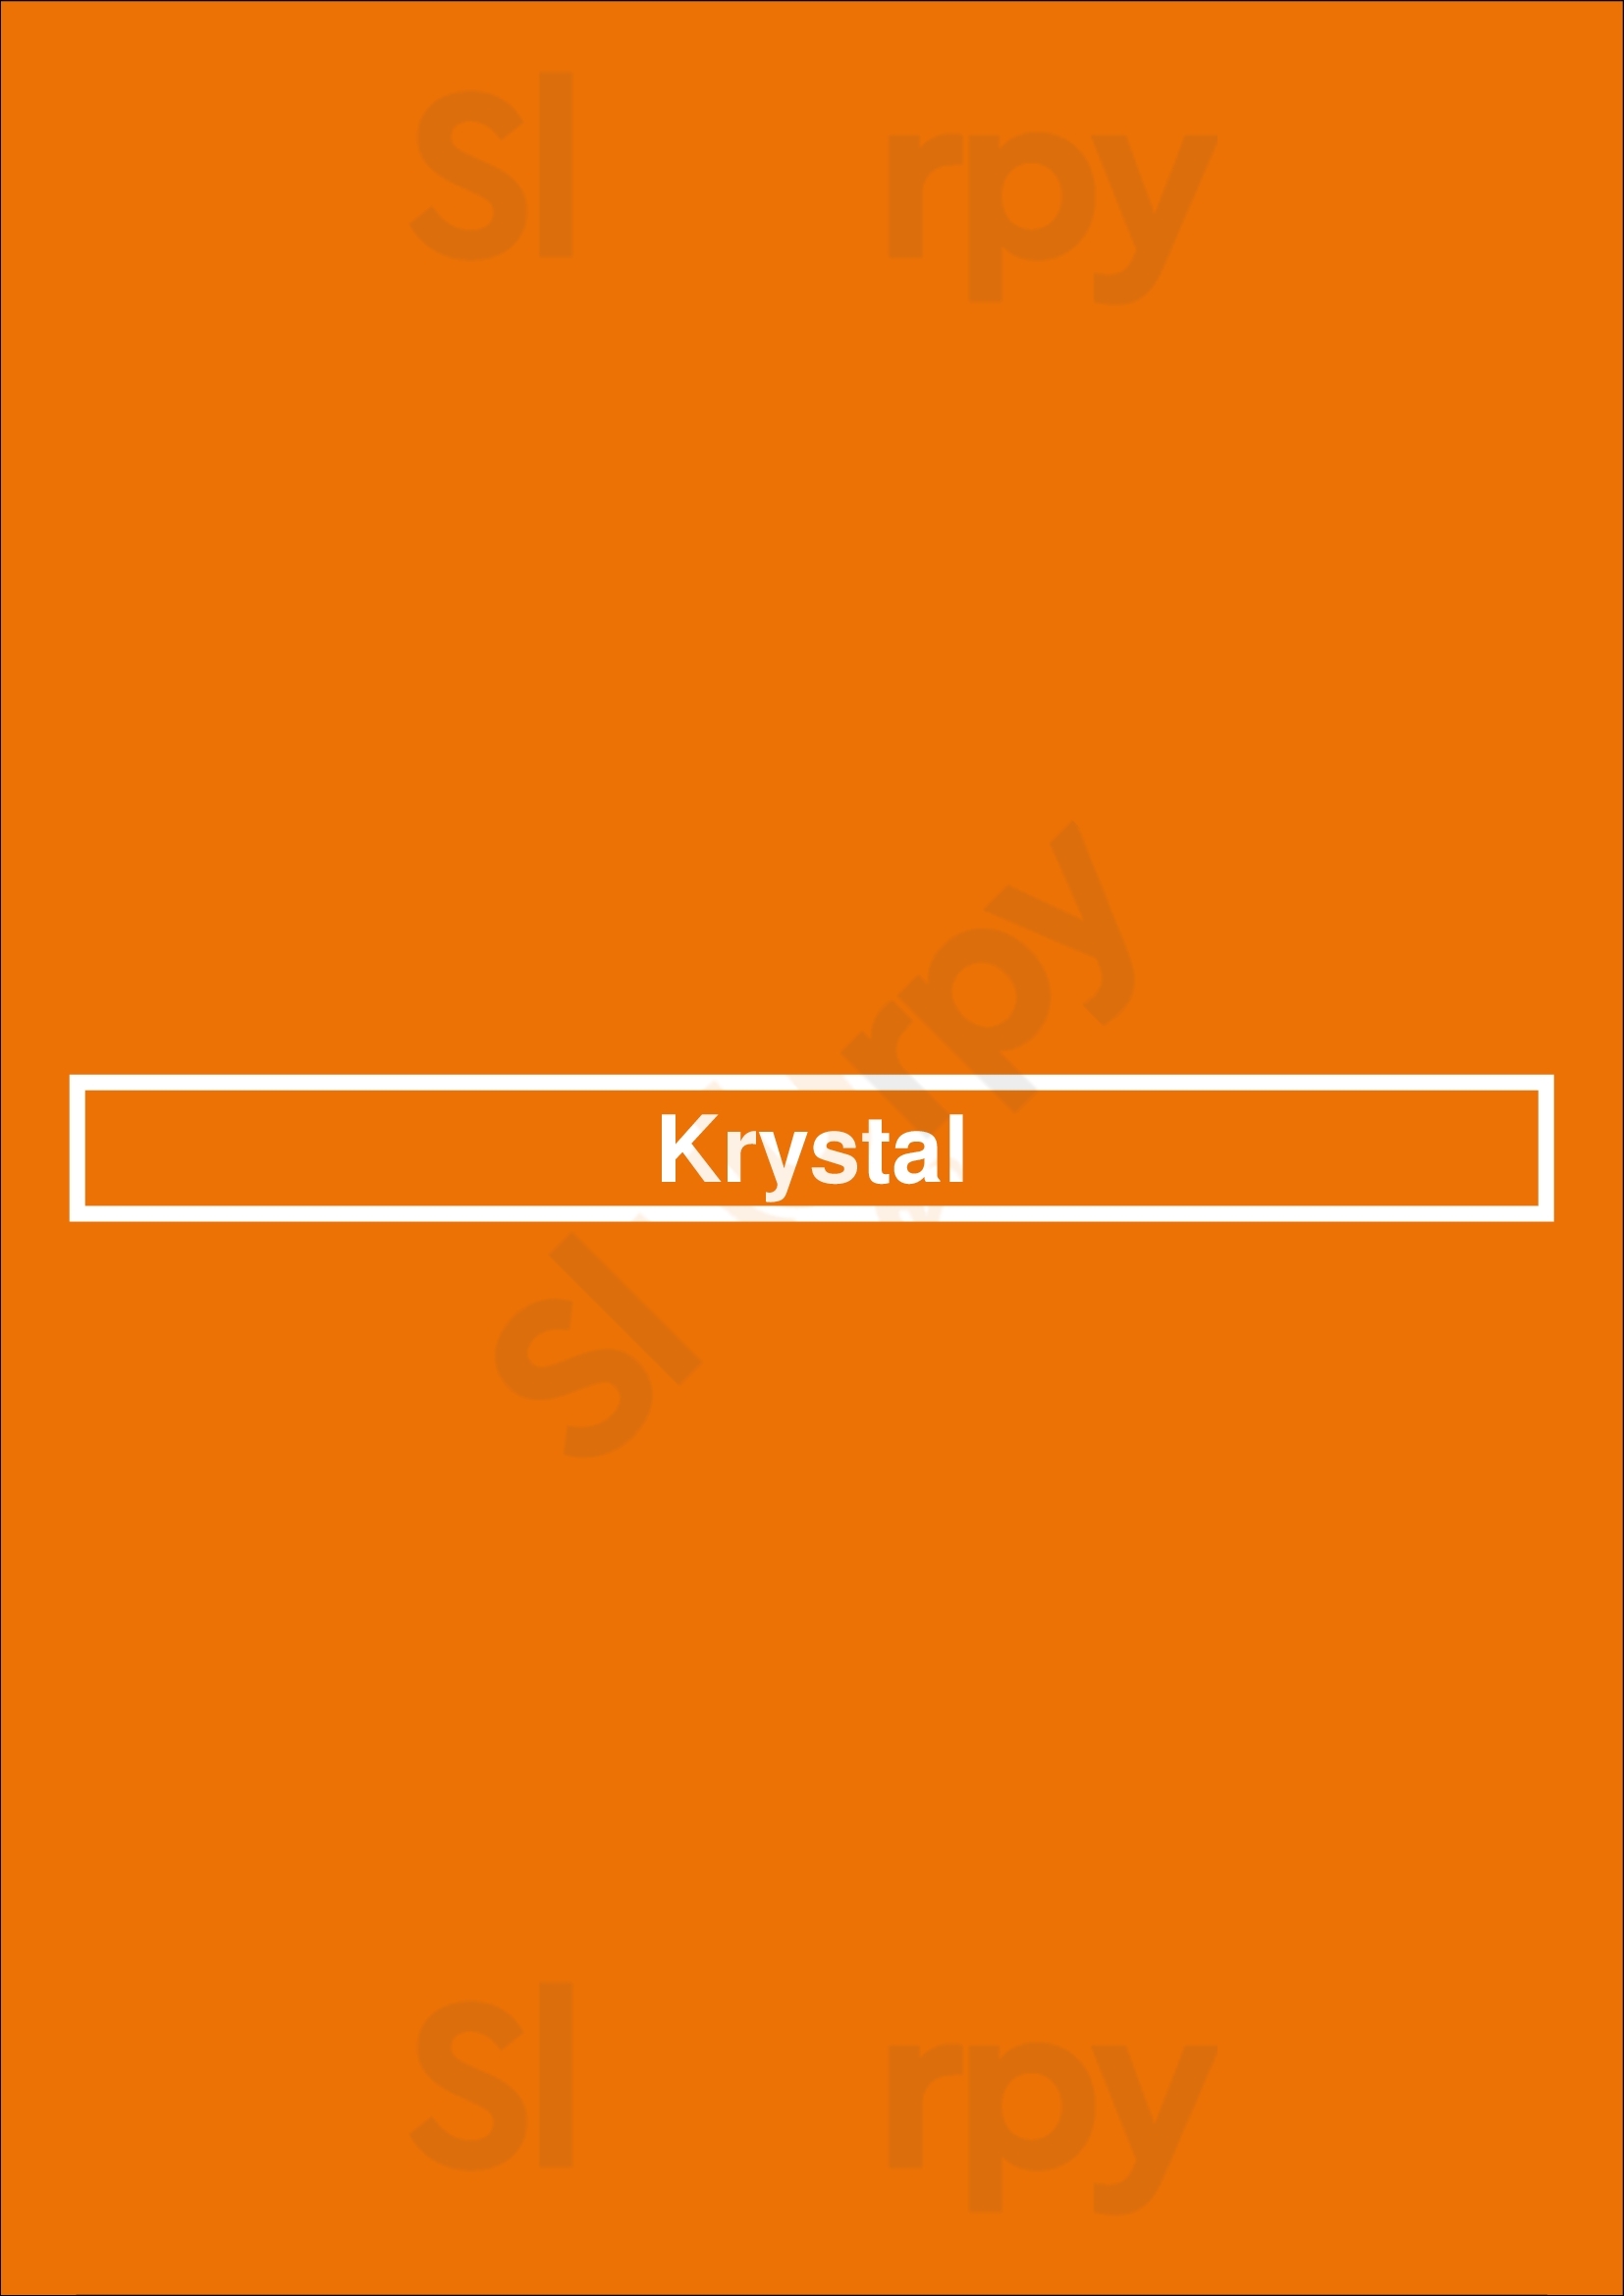 Krystal Atlanta Menu - 1